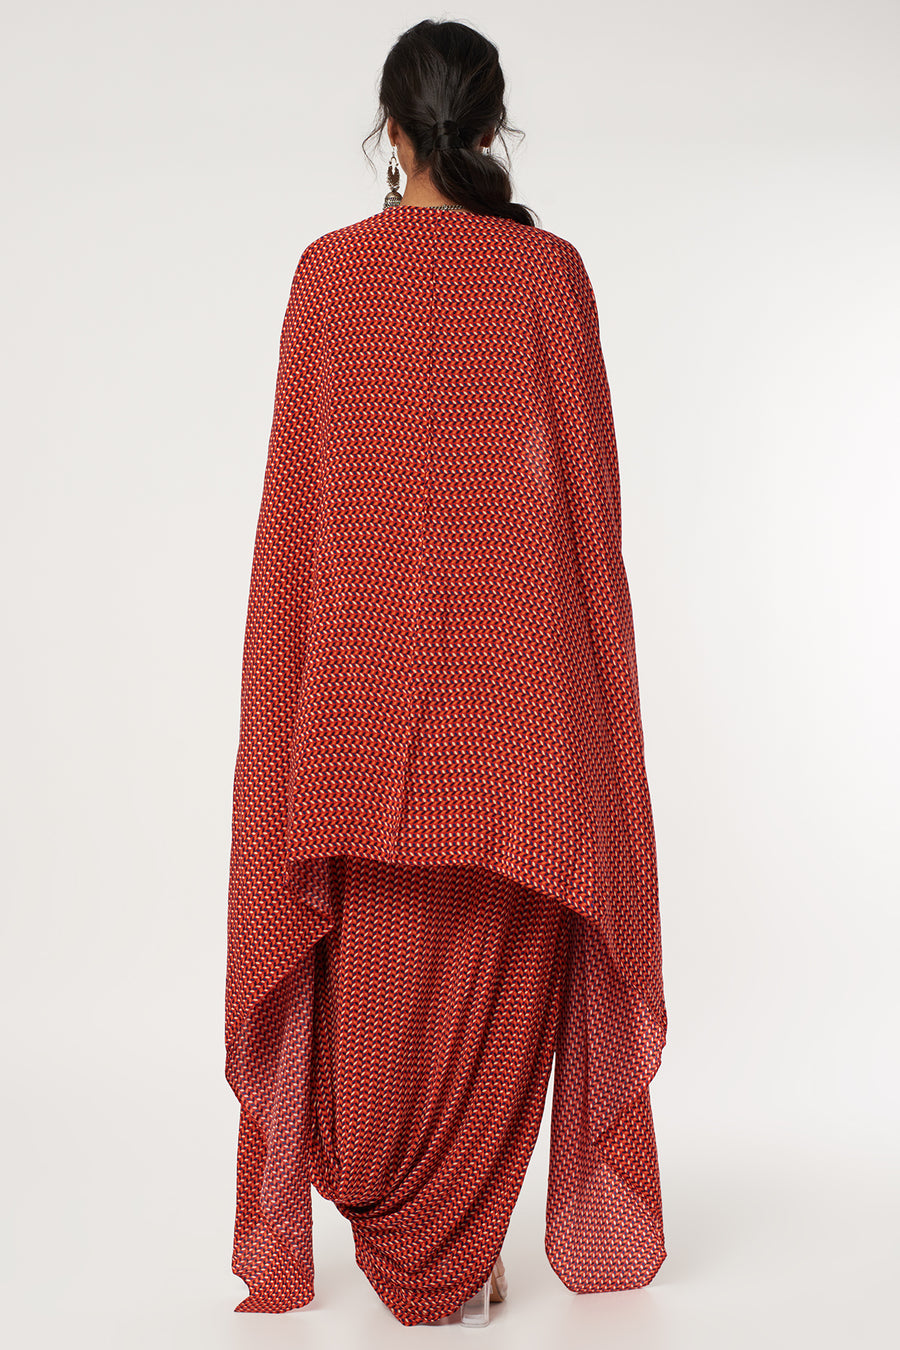 Red Leaf Print Drape Skirt Set